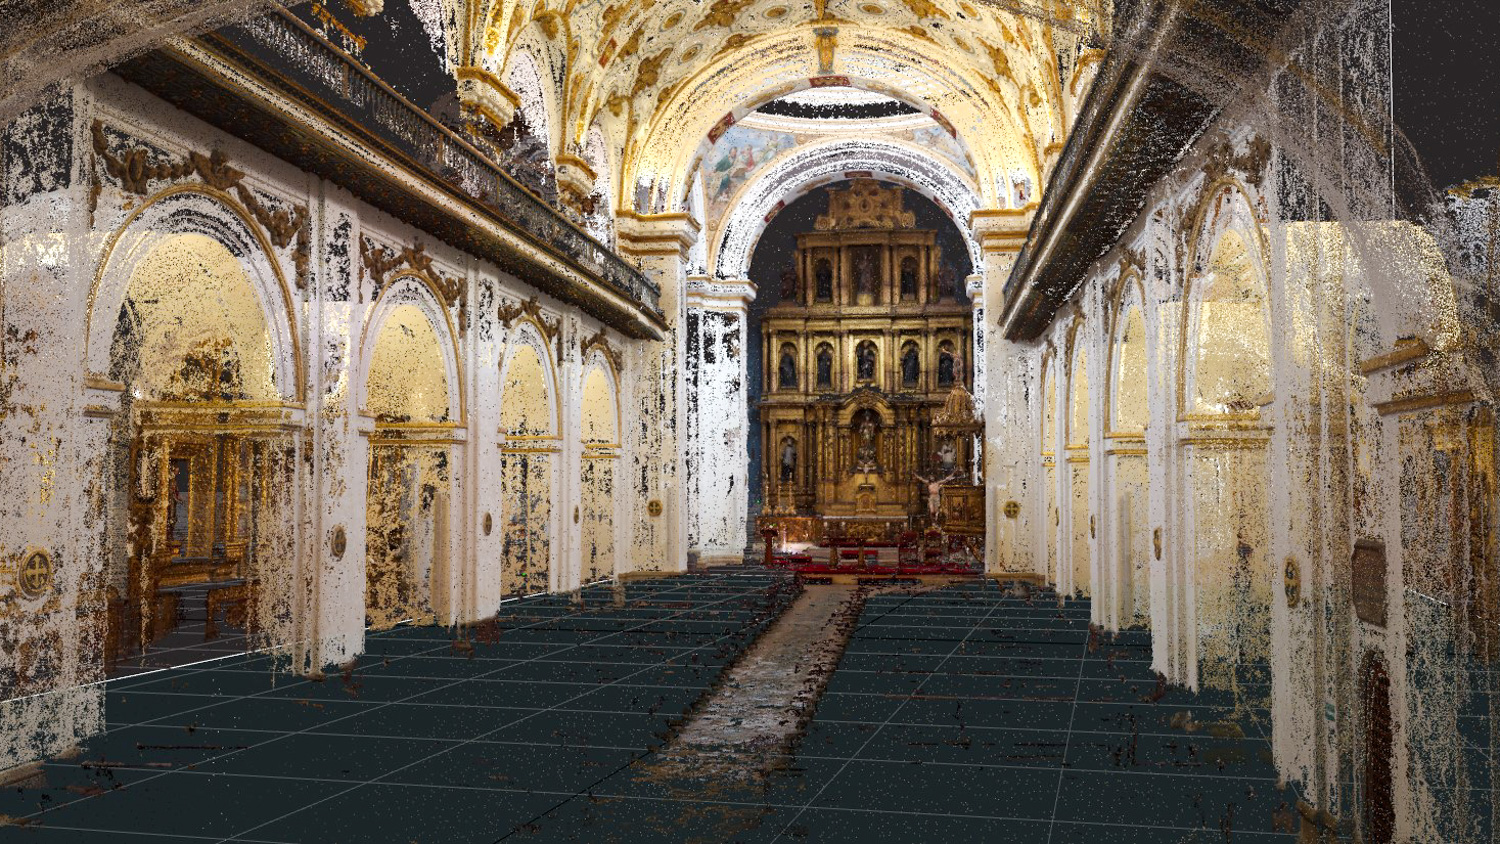 A partial rendering of the San Ignacio Church interior